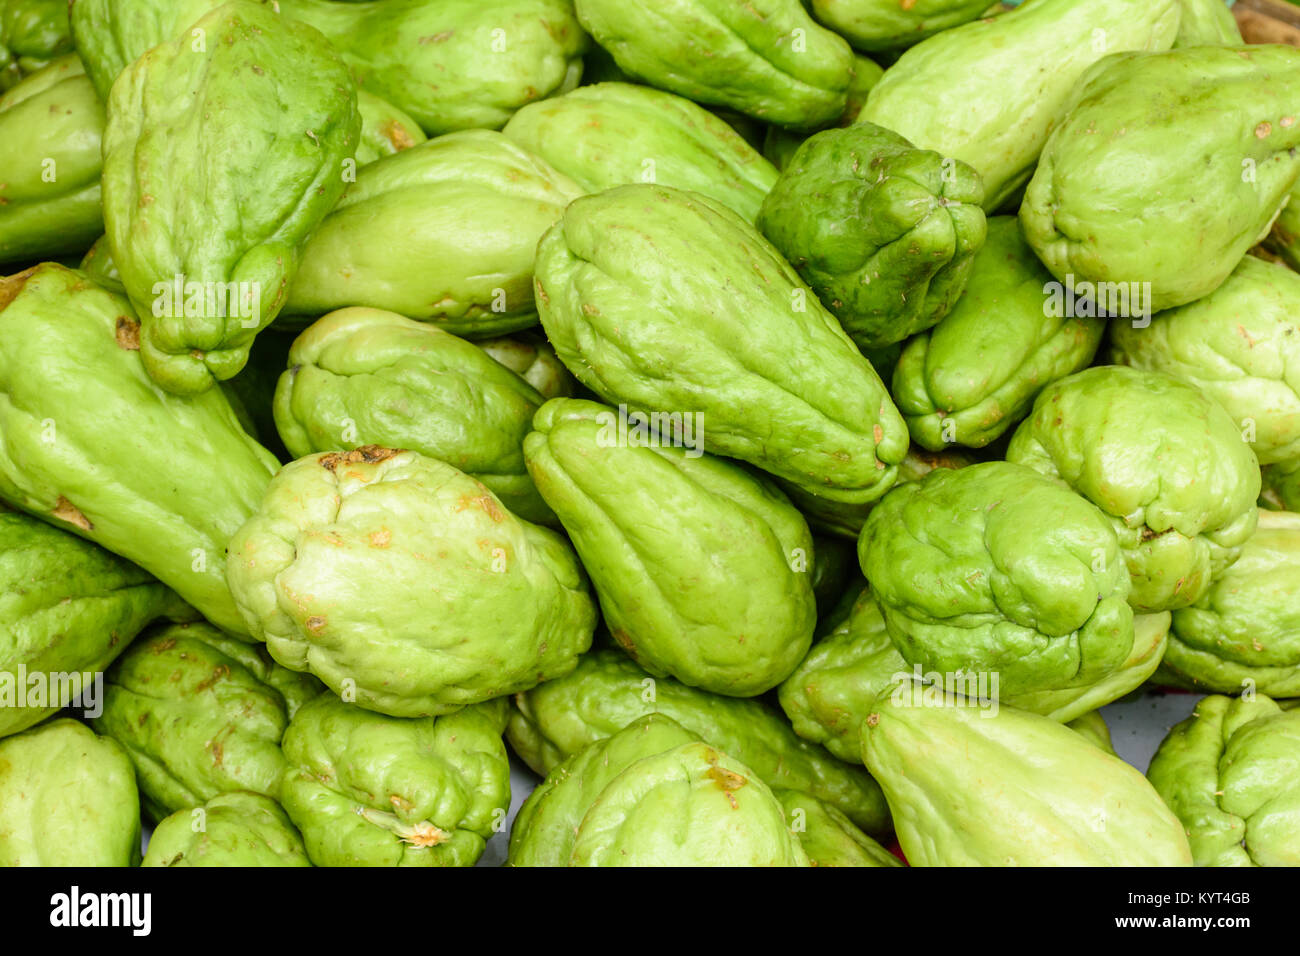 closeup photo of fresh vegetable, marrow or chayote Stock Photo